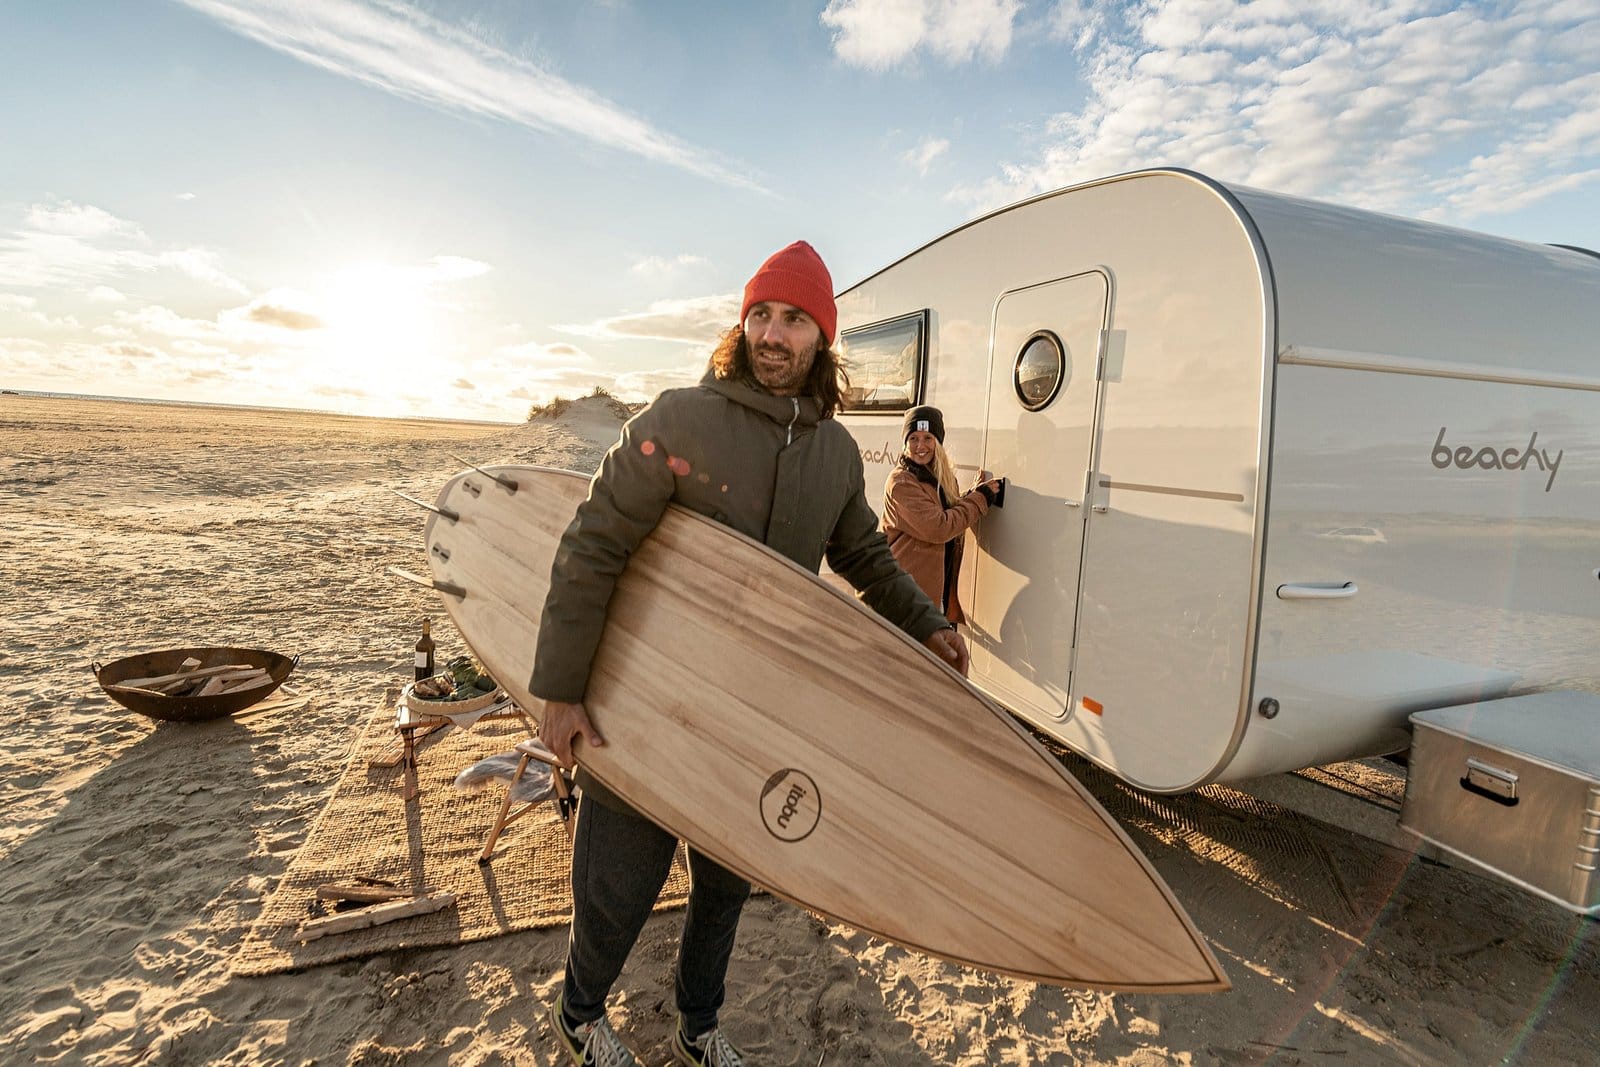 ITOBU-Surfboard bei Fotoshooting für Hobby beachy